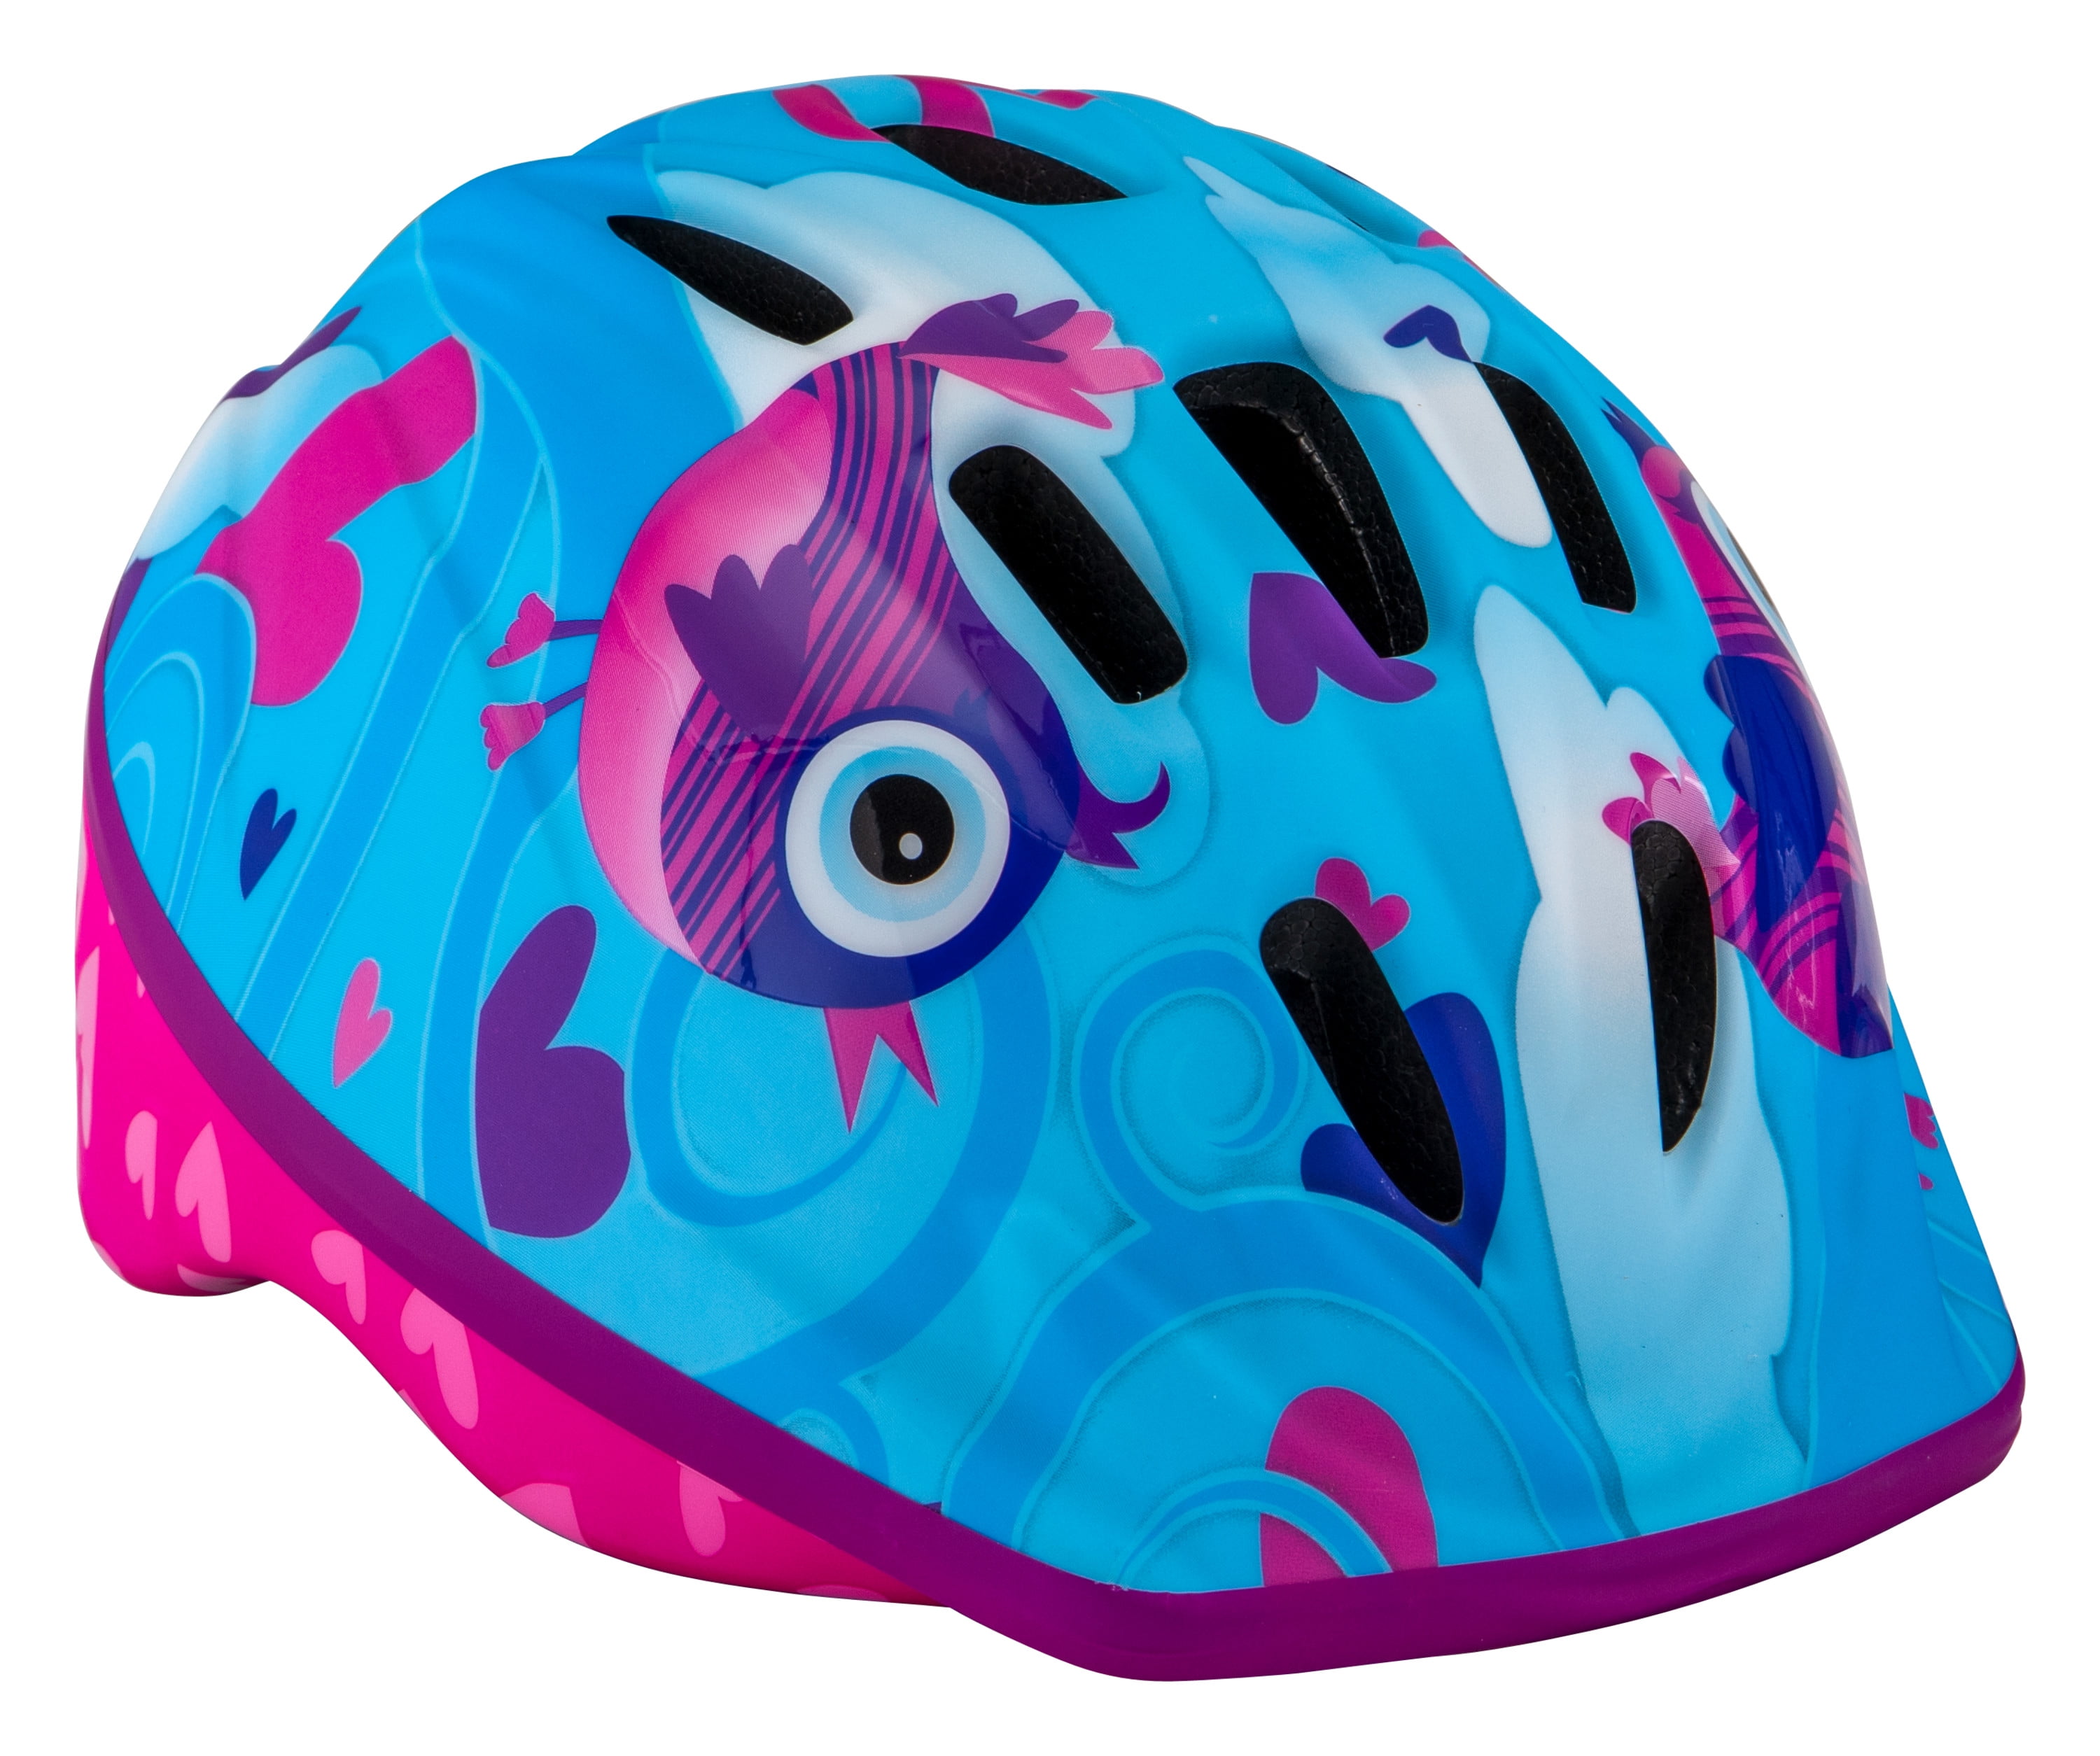 Schwinn Classic Toddler Bicycle Helmet, Ages 3 - 5, Pink/Blue, Owl -  Walmart.com